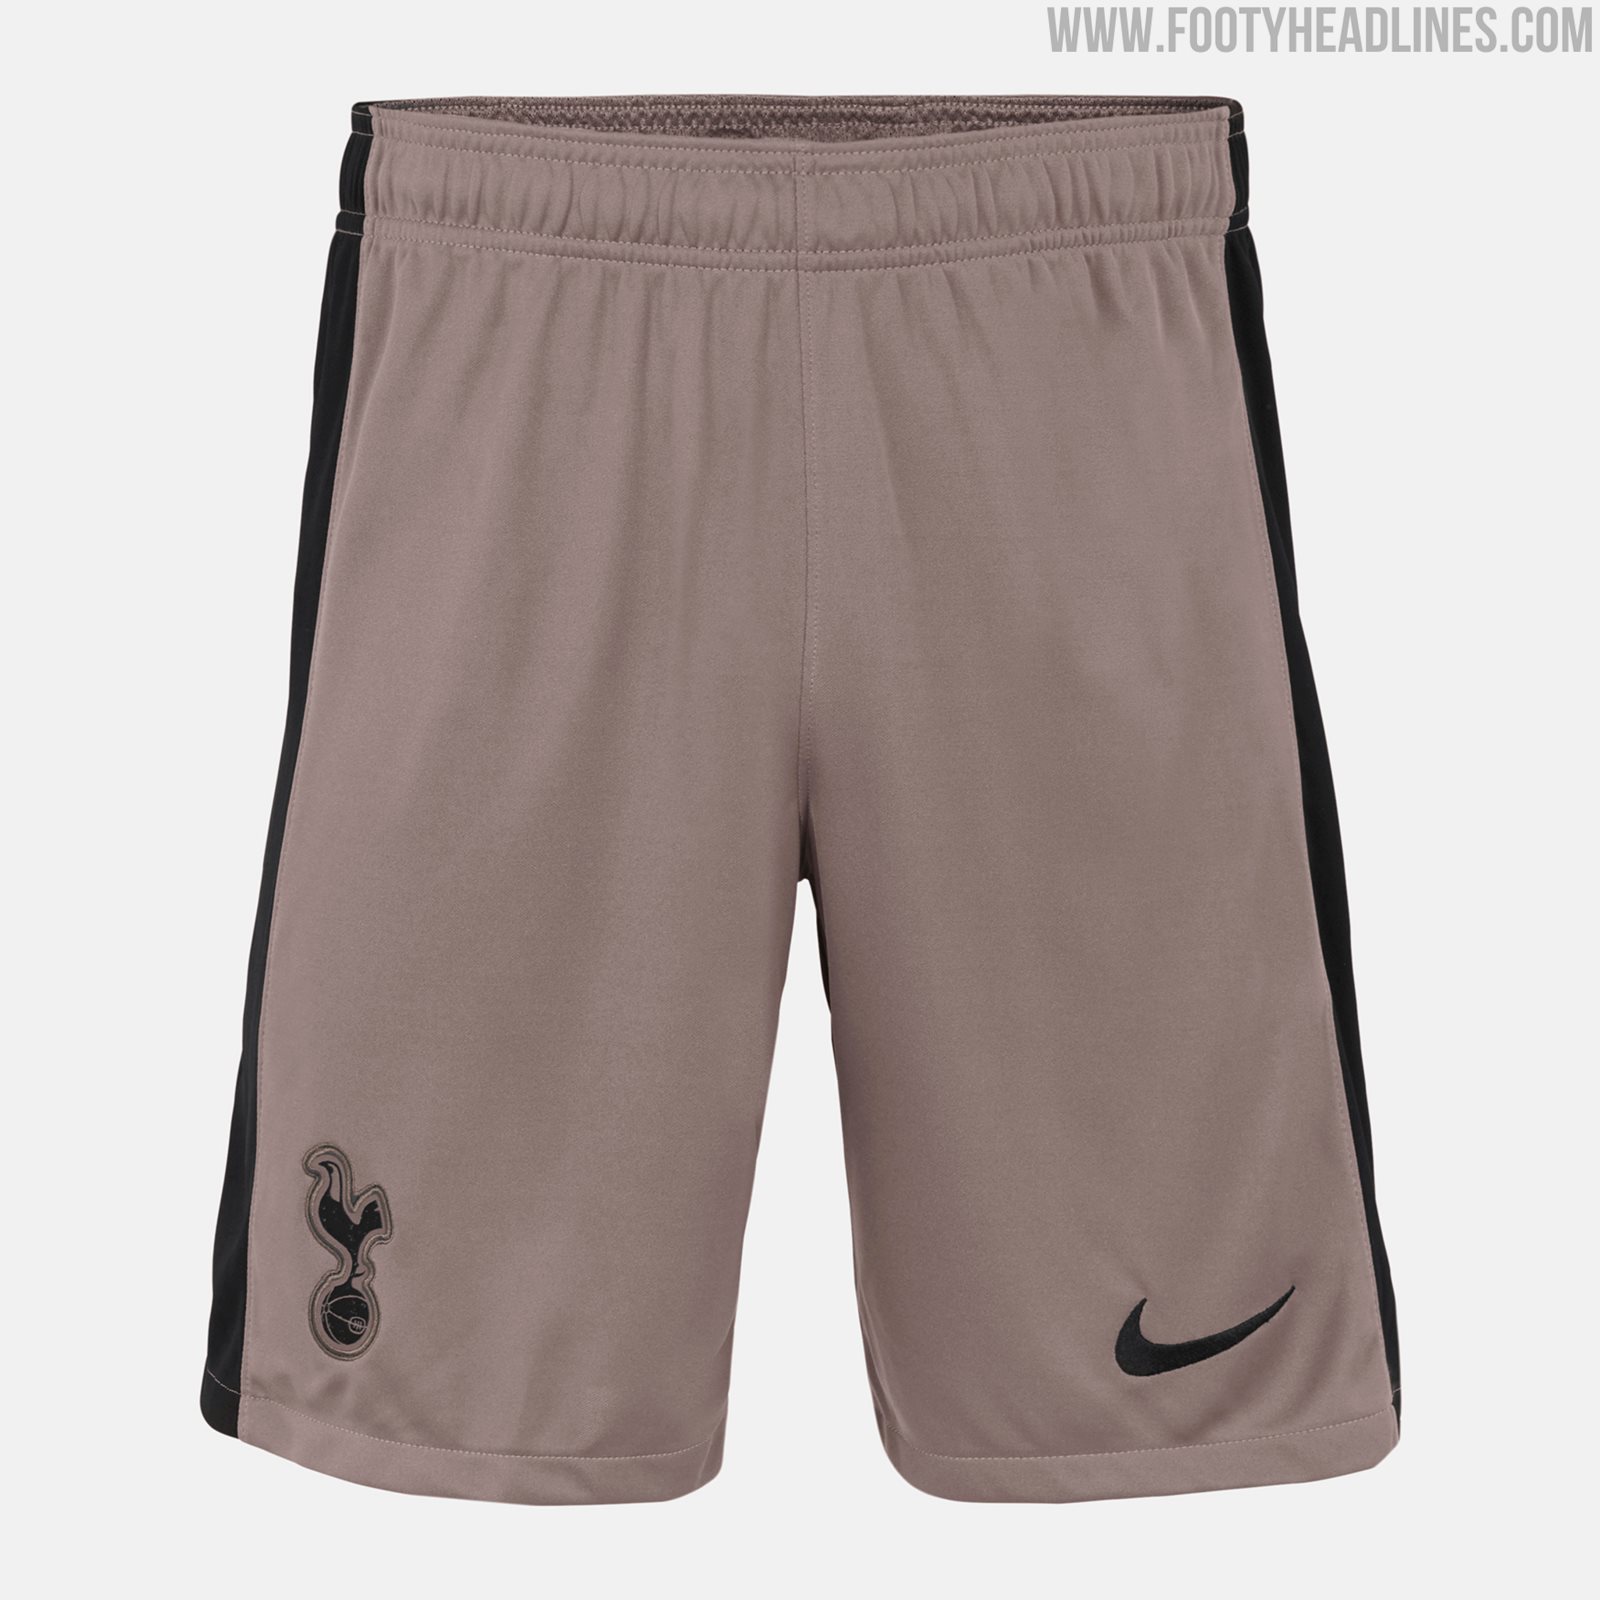 Tottenham Hotspur 2022-23 Nike Third Kit Released » The Kitman